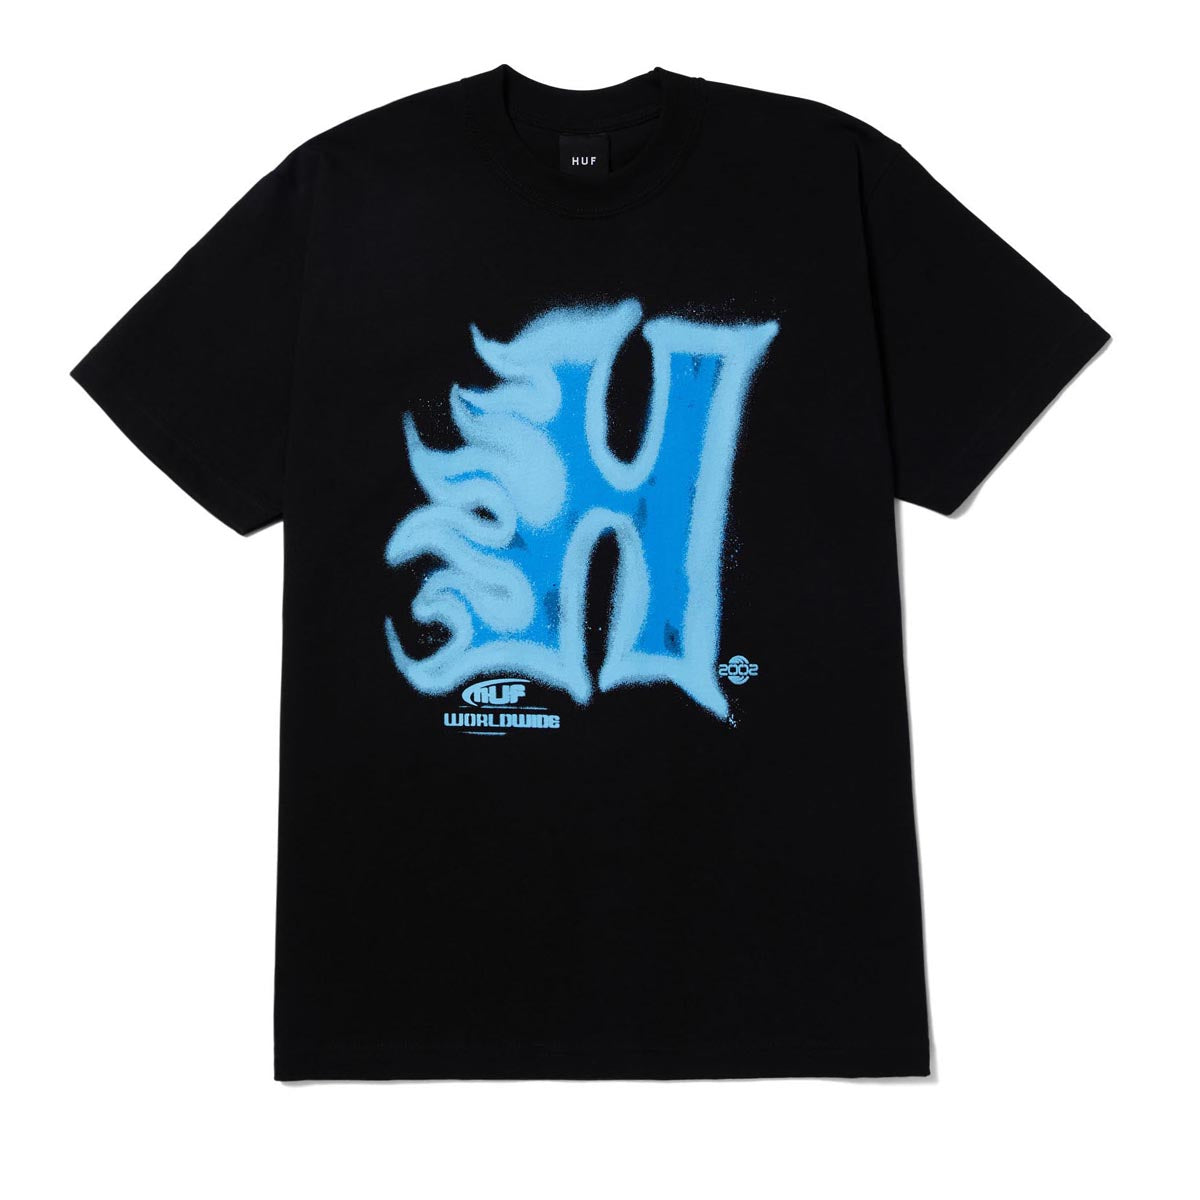 HUF Heat Wave T-Shirt - Black image 1